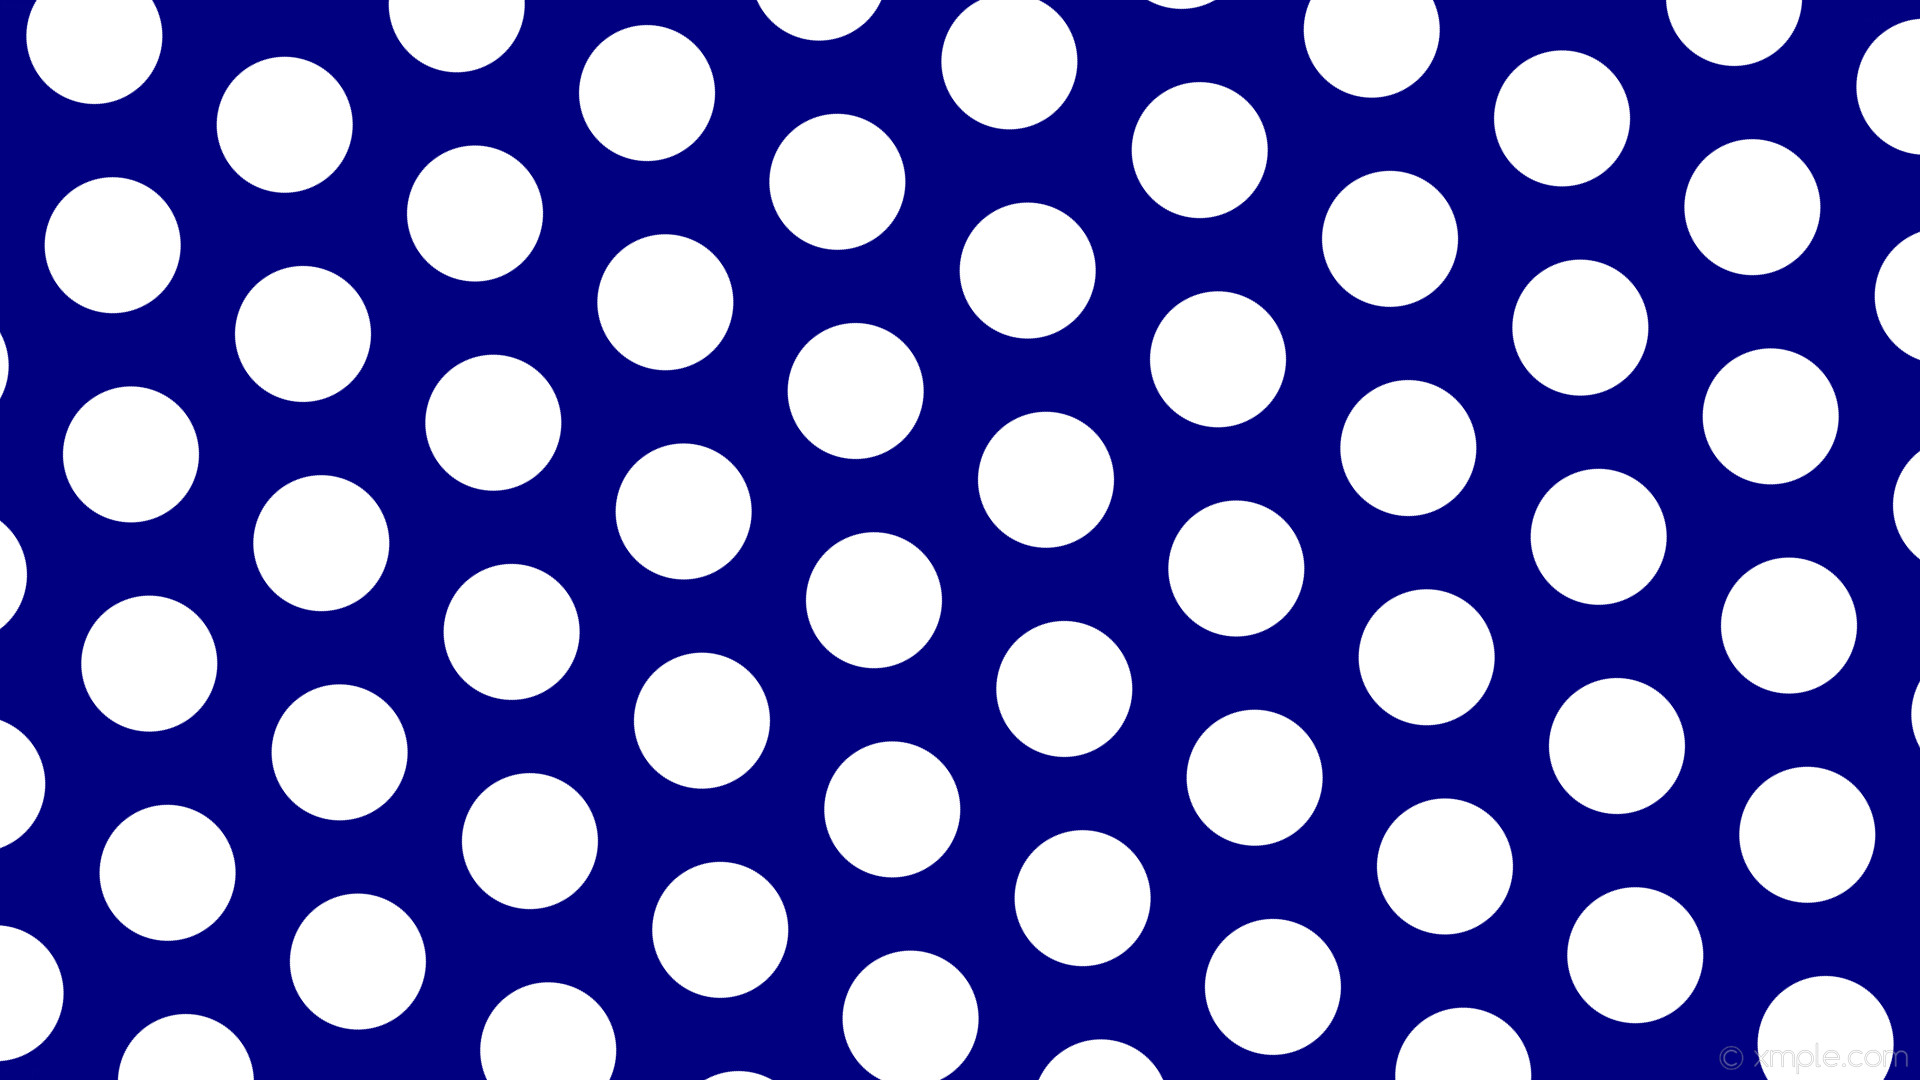 1920x1080 wallpaper hexagon blue white polka dots navy #000080 #ffffff diagonal 35Â°  136px 210px